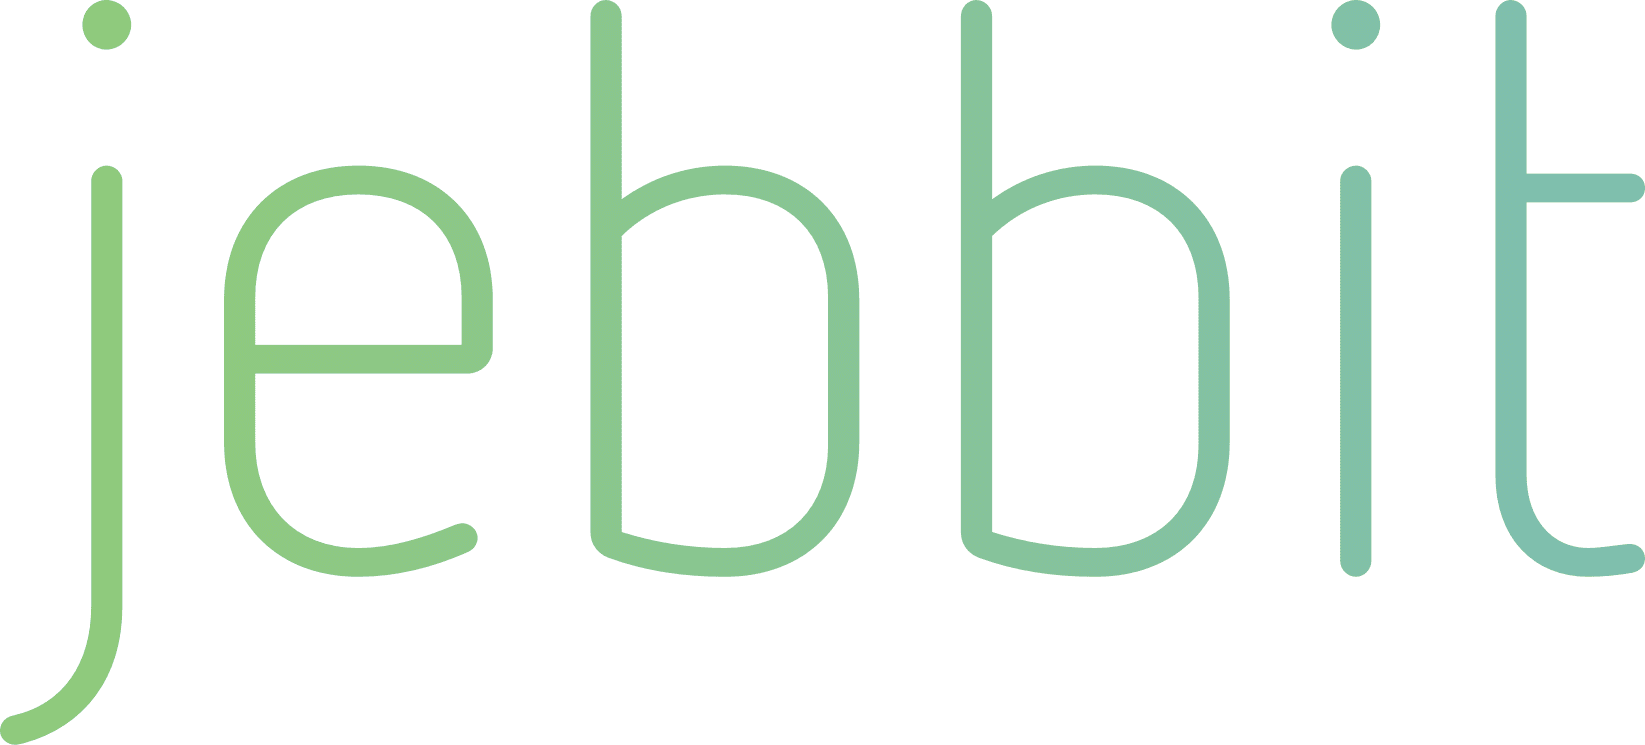 Jebbit - Crunchbase Company Profile & Funding